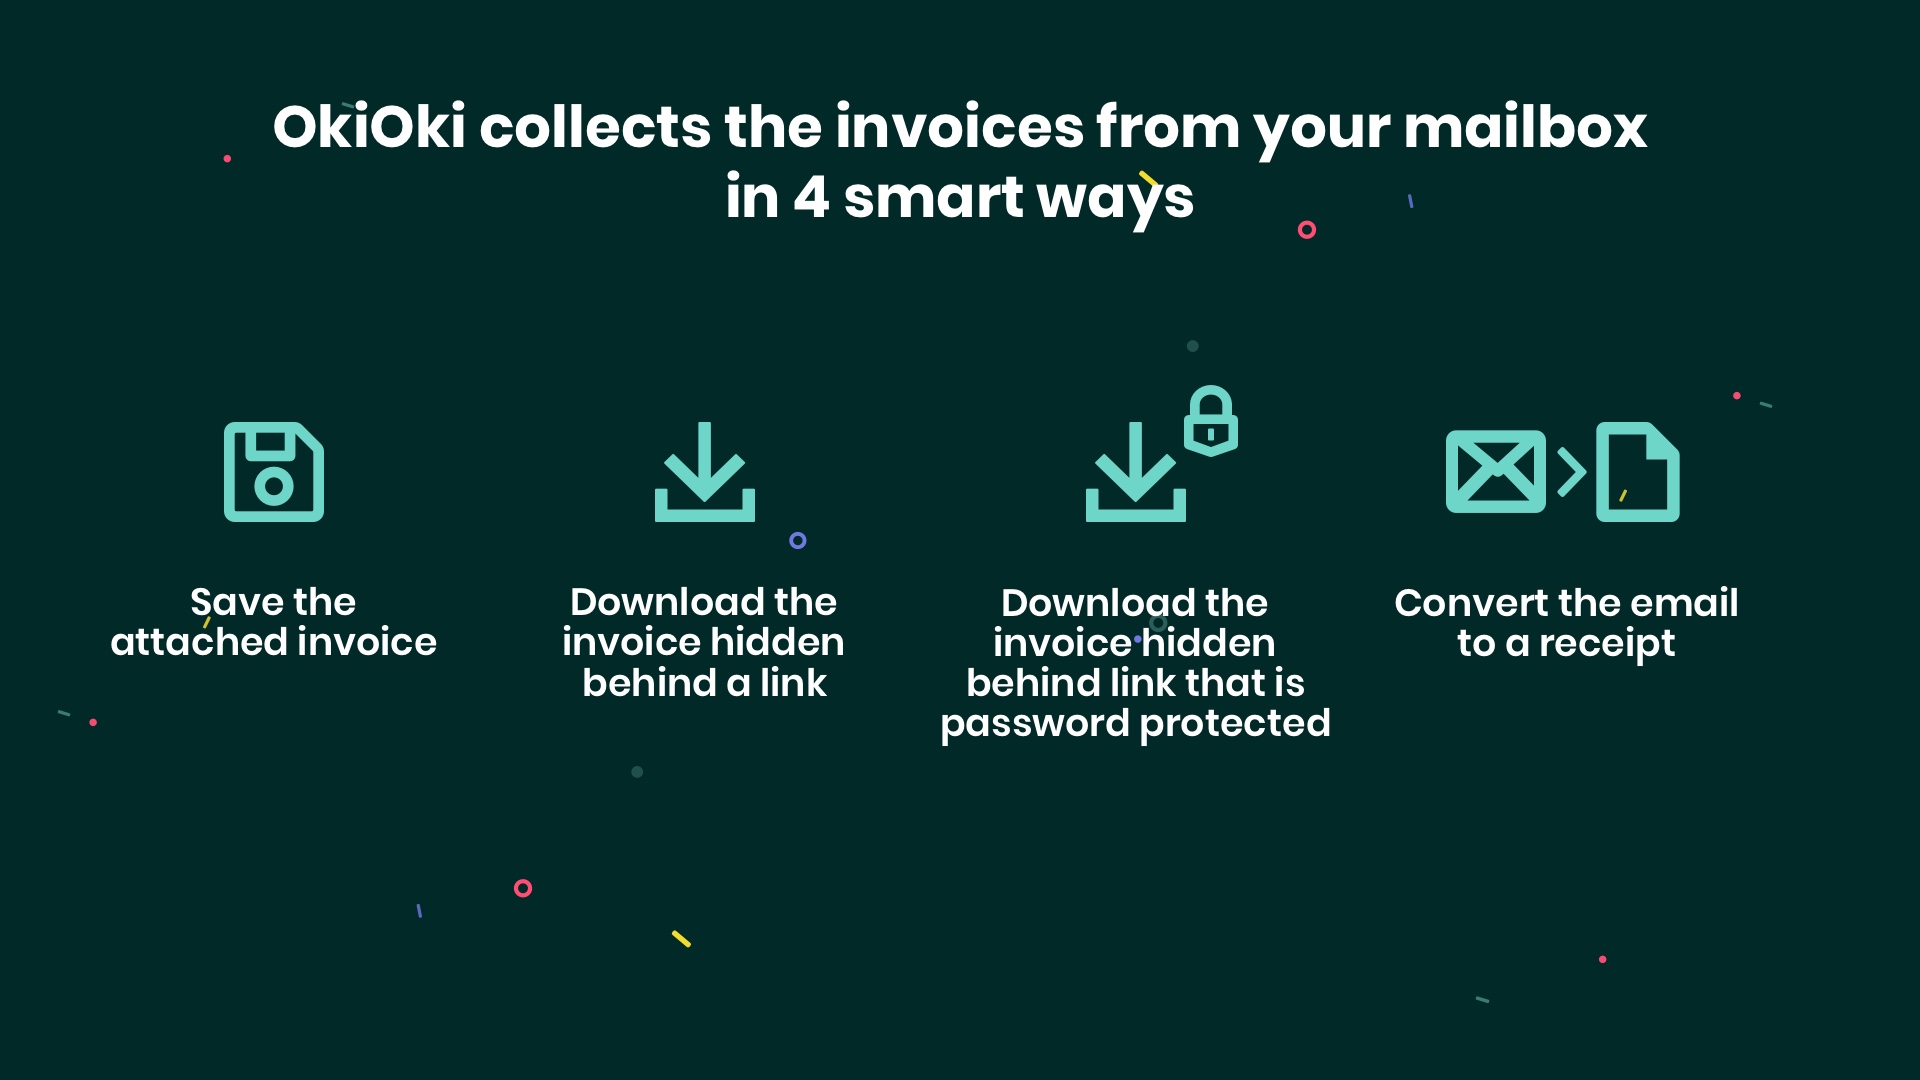 4_ways_to_find_invoice_in_the_mailbox_-_EN.jpg